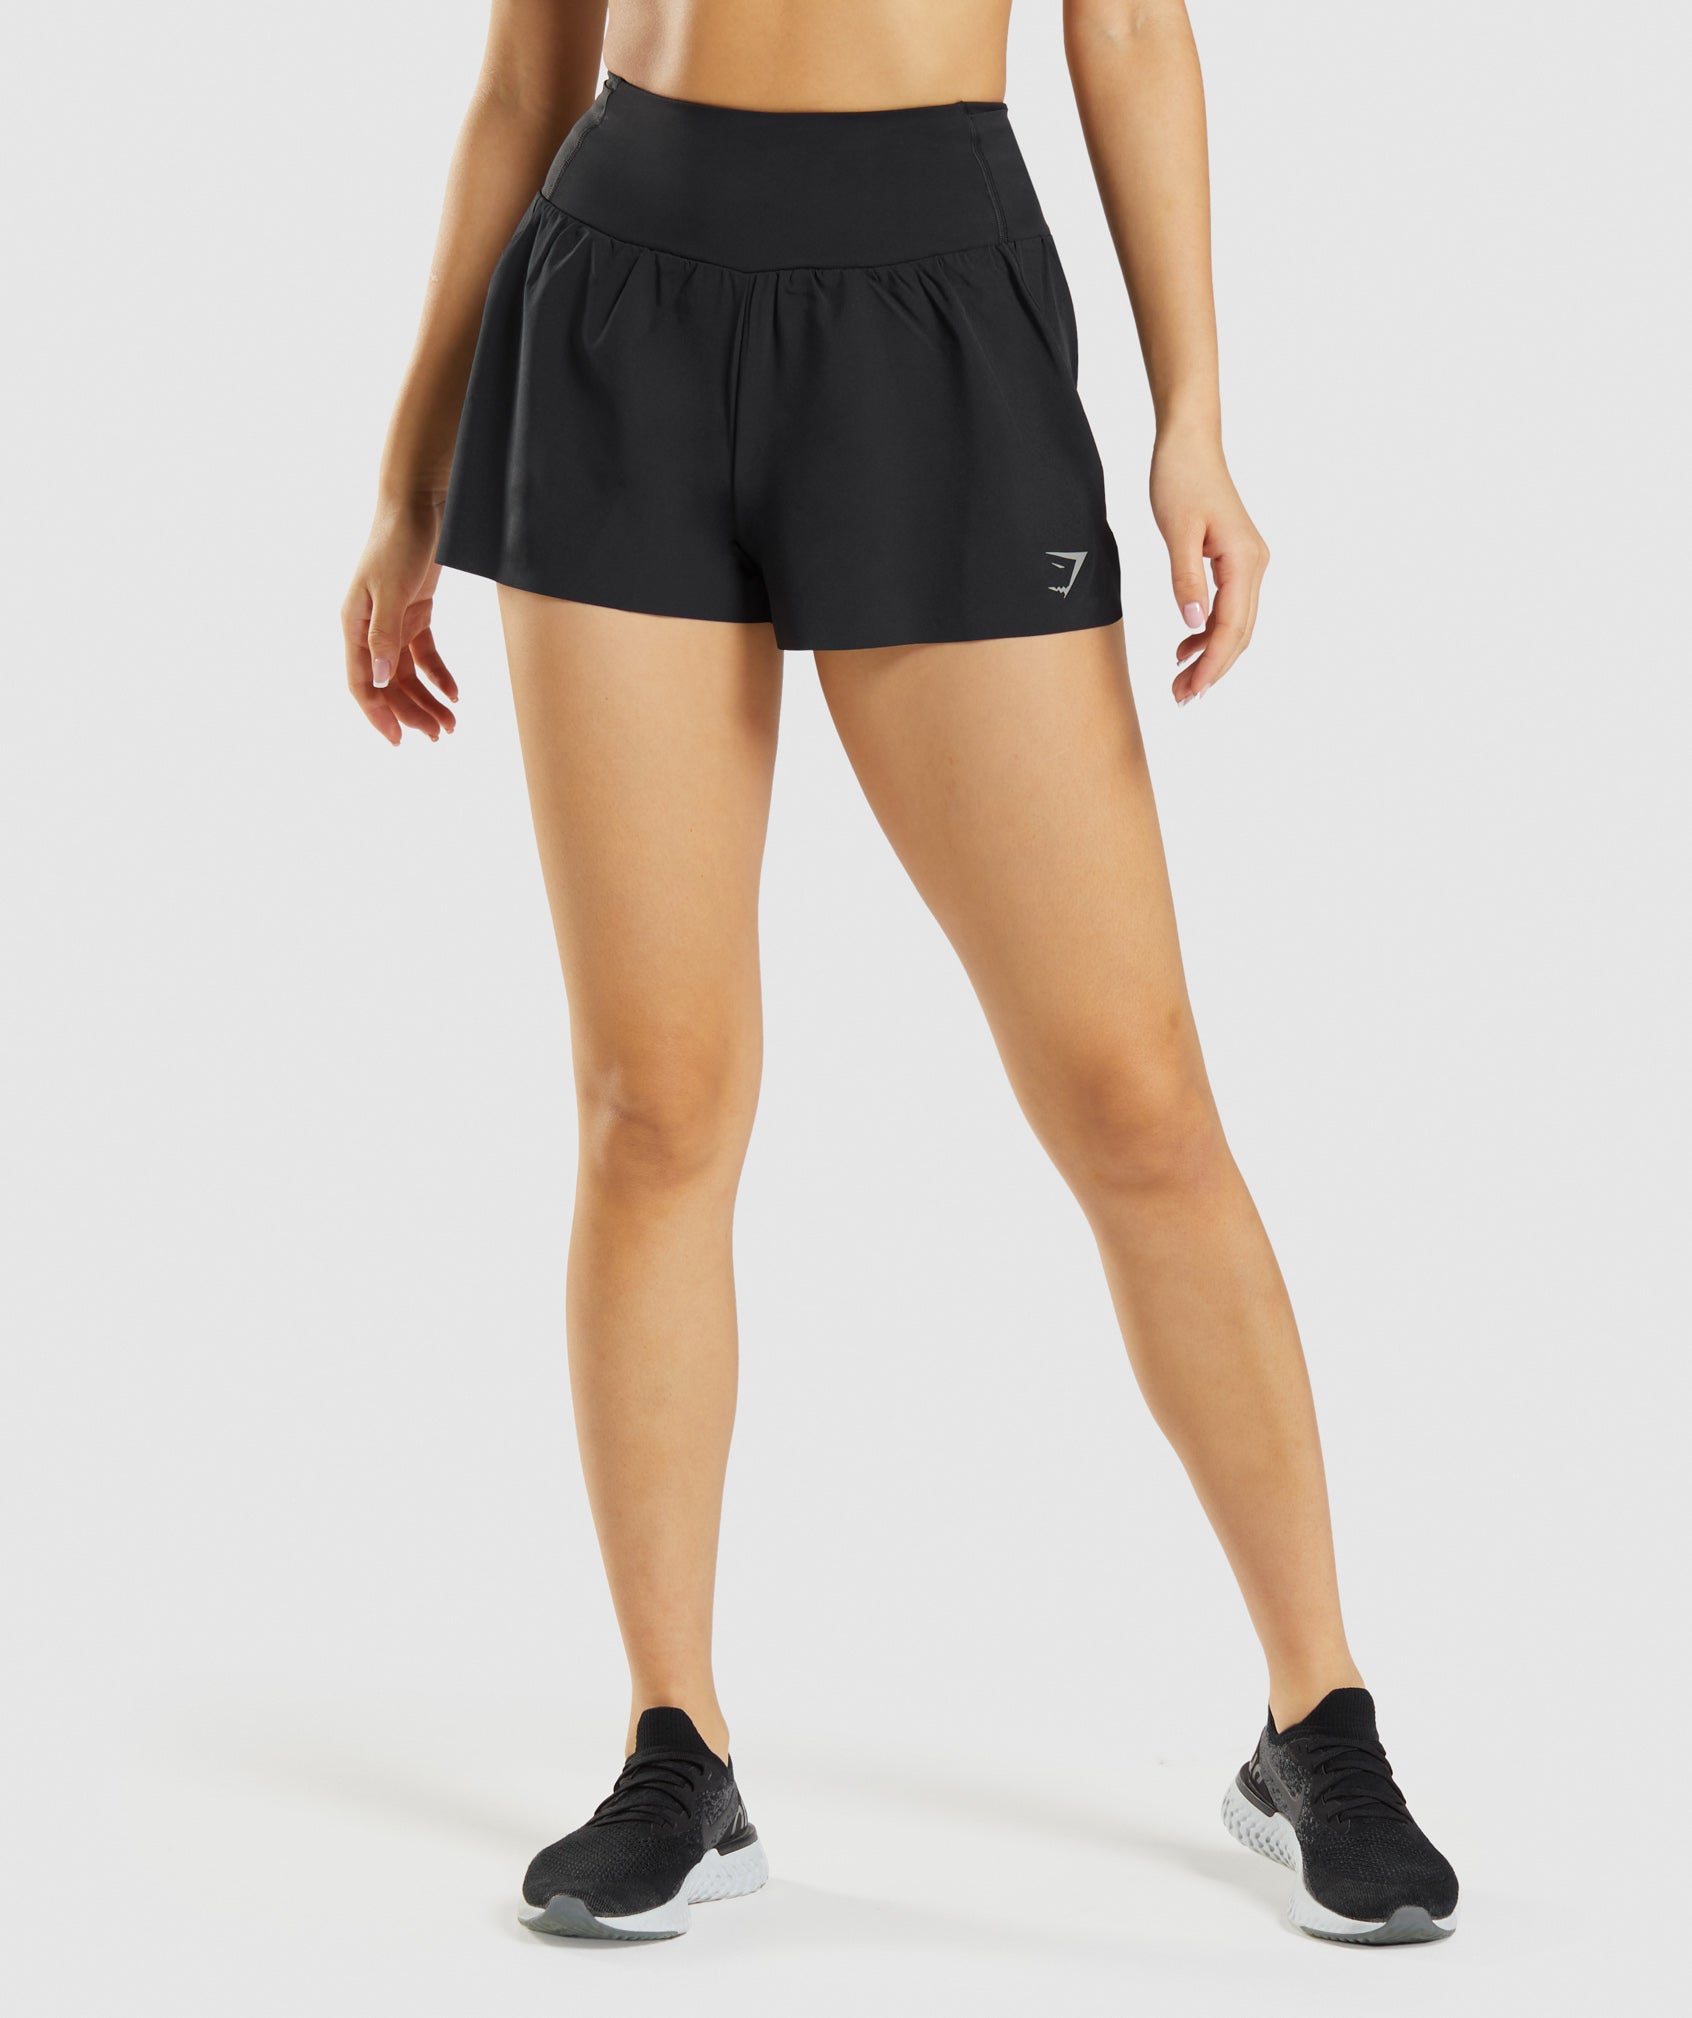 Women's Running Shorts - Gymshark